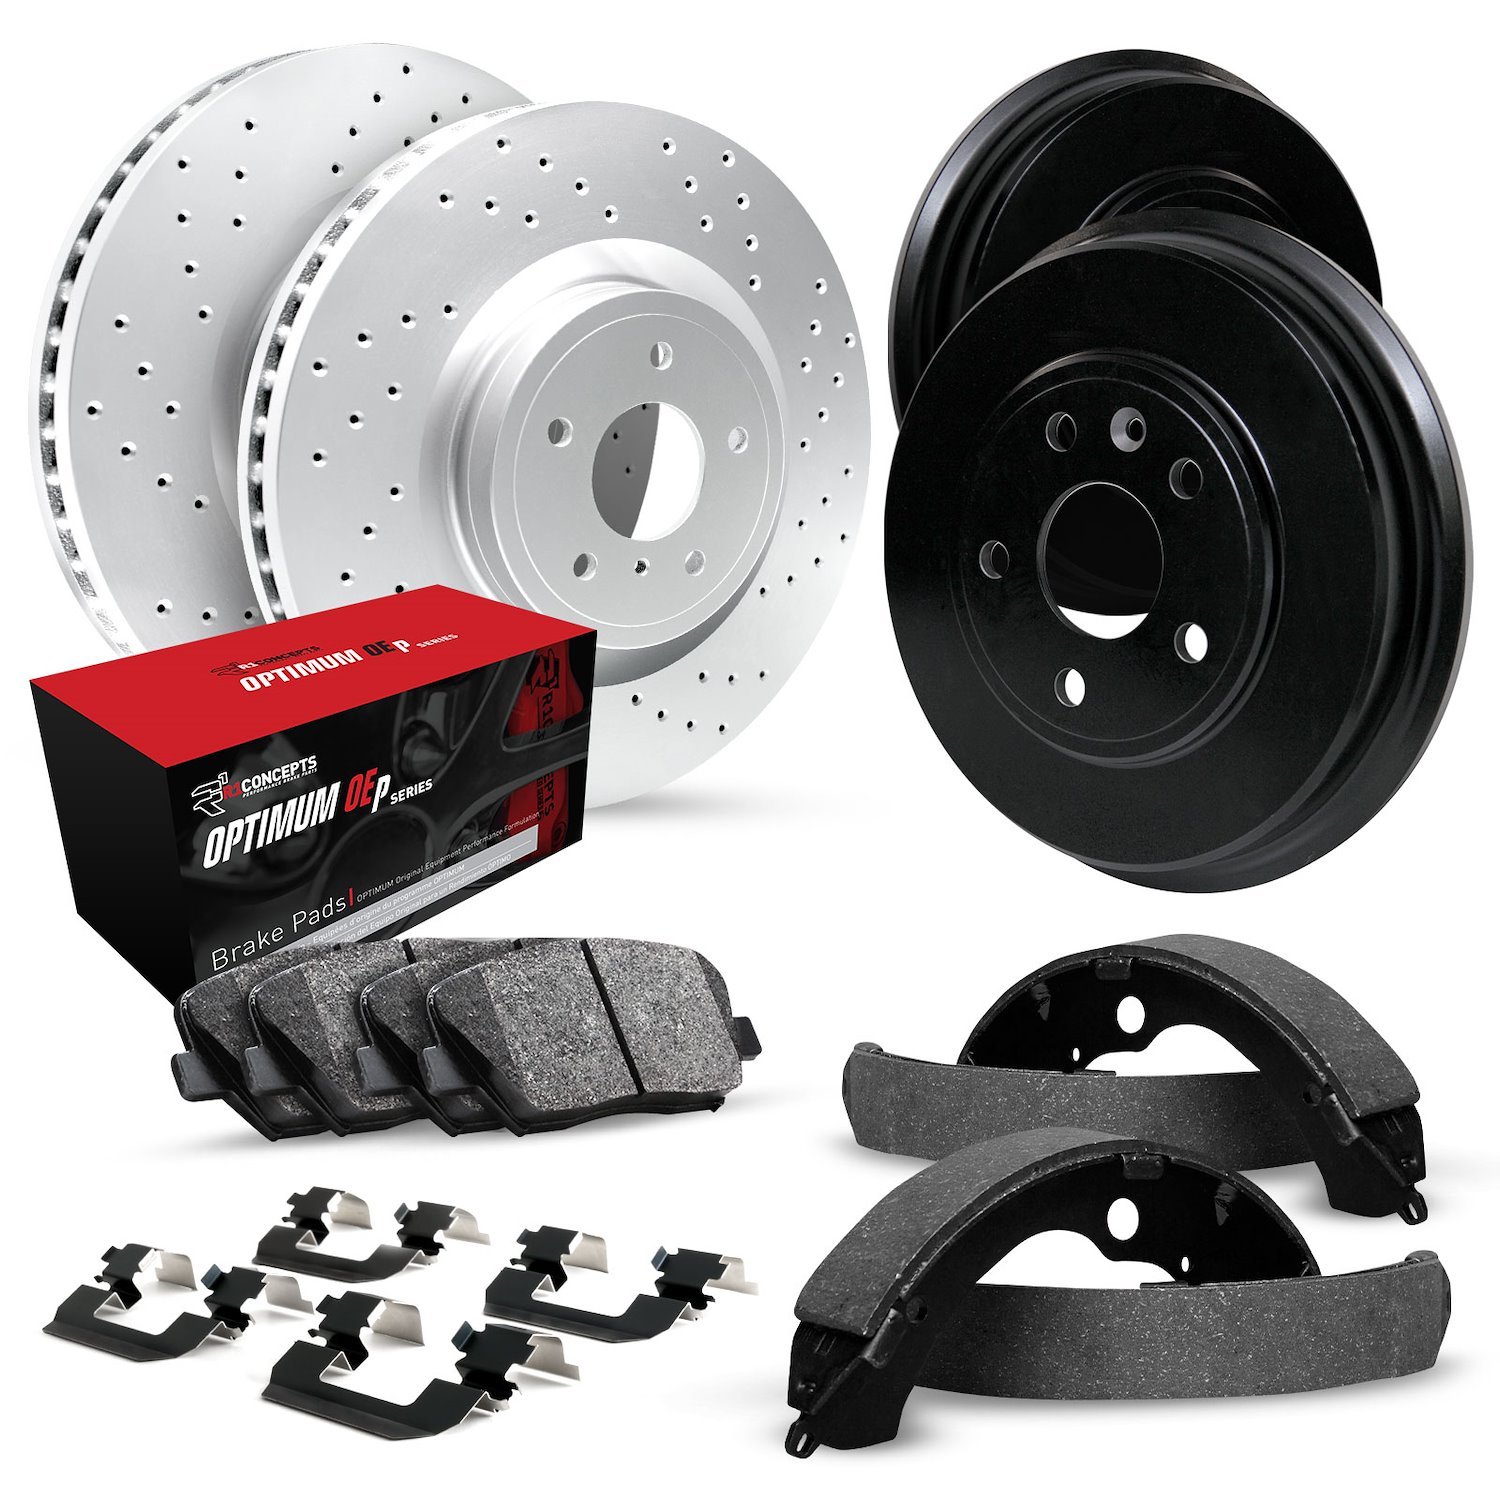 GEO-Carbon Drilled Brake Rotor & Drum Set w/Optimum OE Pads, Shoes, & Hardware, 2010-2013 Ford/Lincoln/Mercury/Mazda